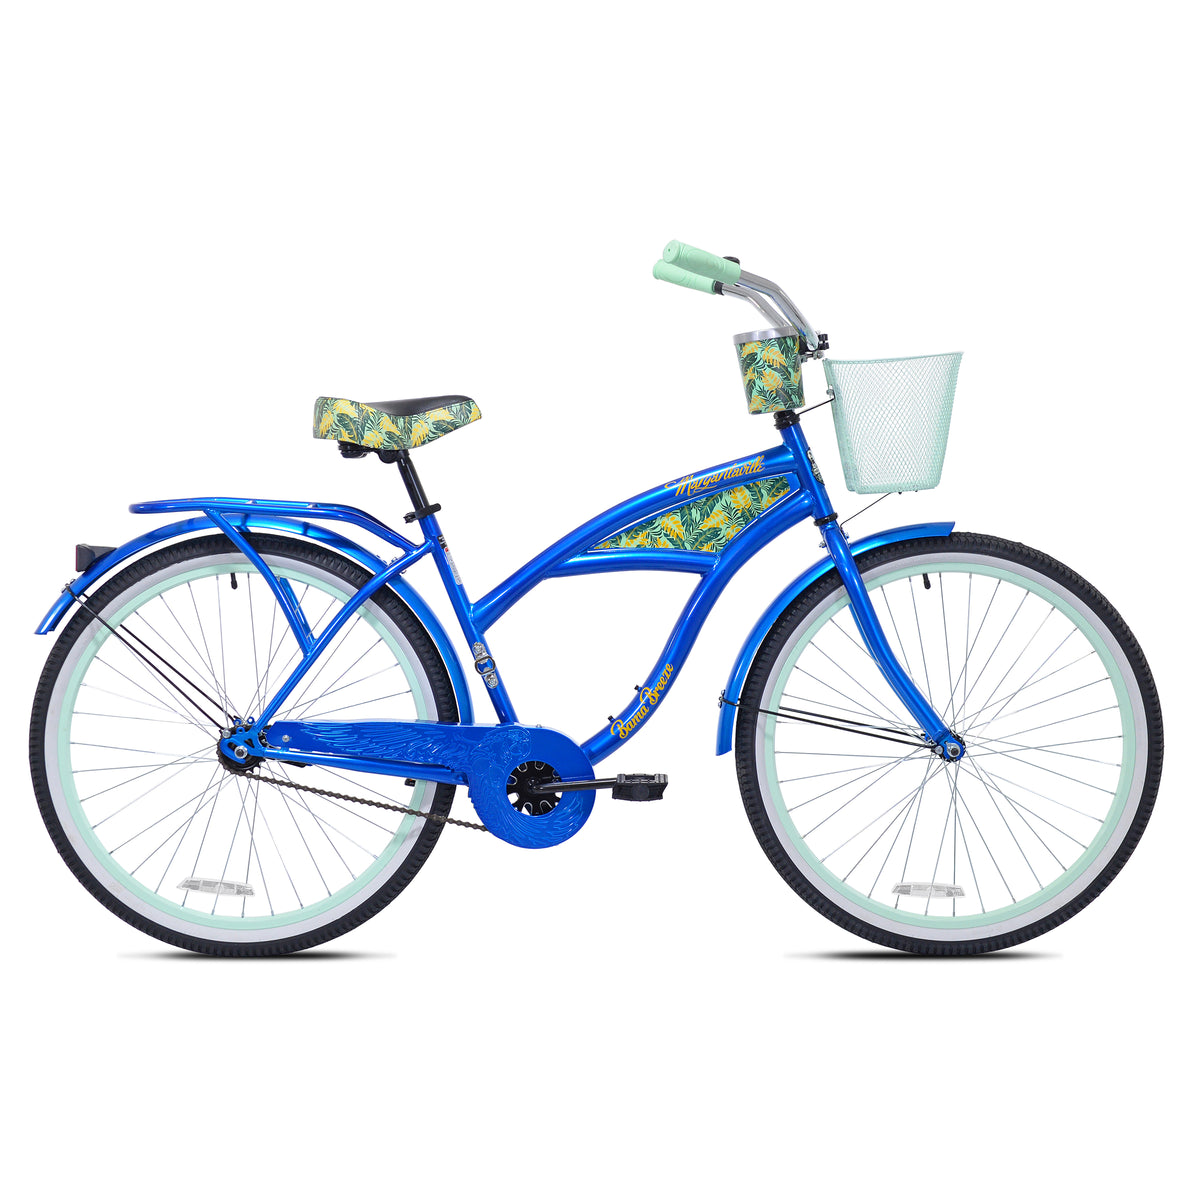 26" Margaritaville® Bama Breeze | Cruiser Bike for Adults Ages 13+